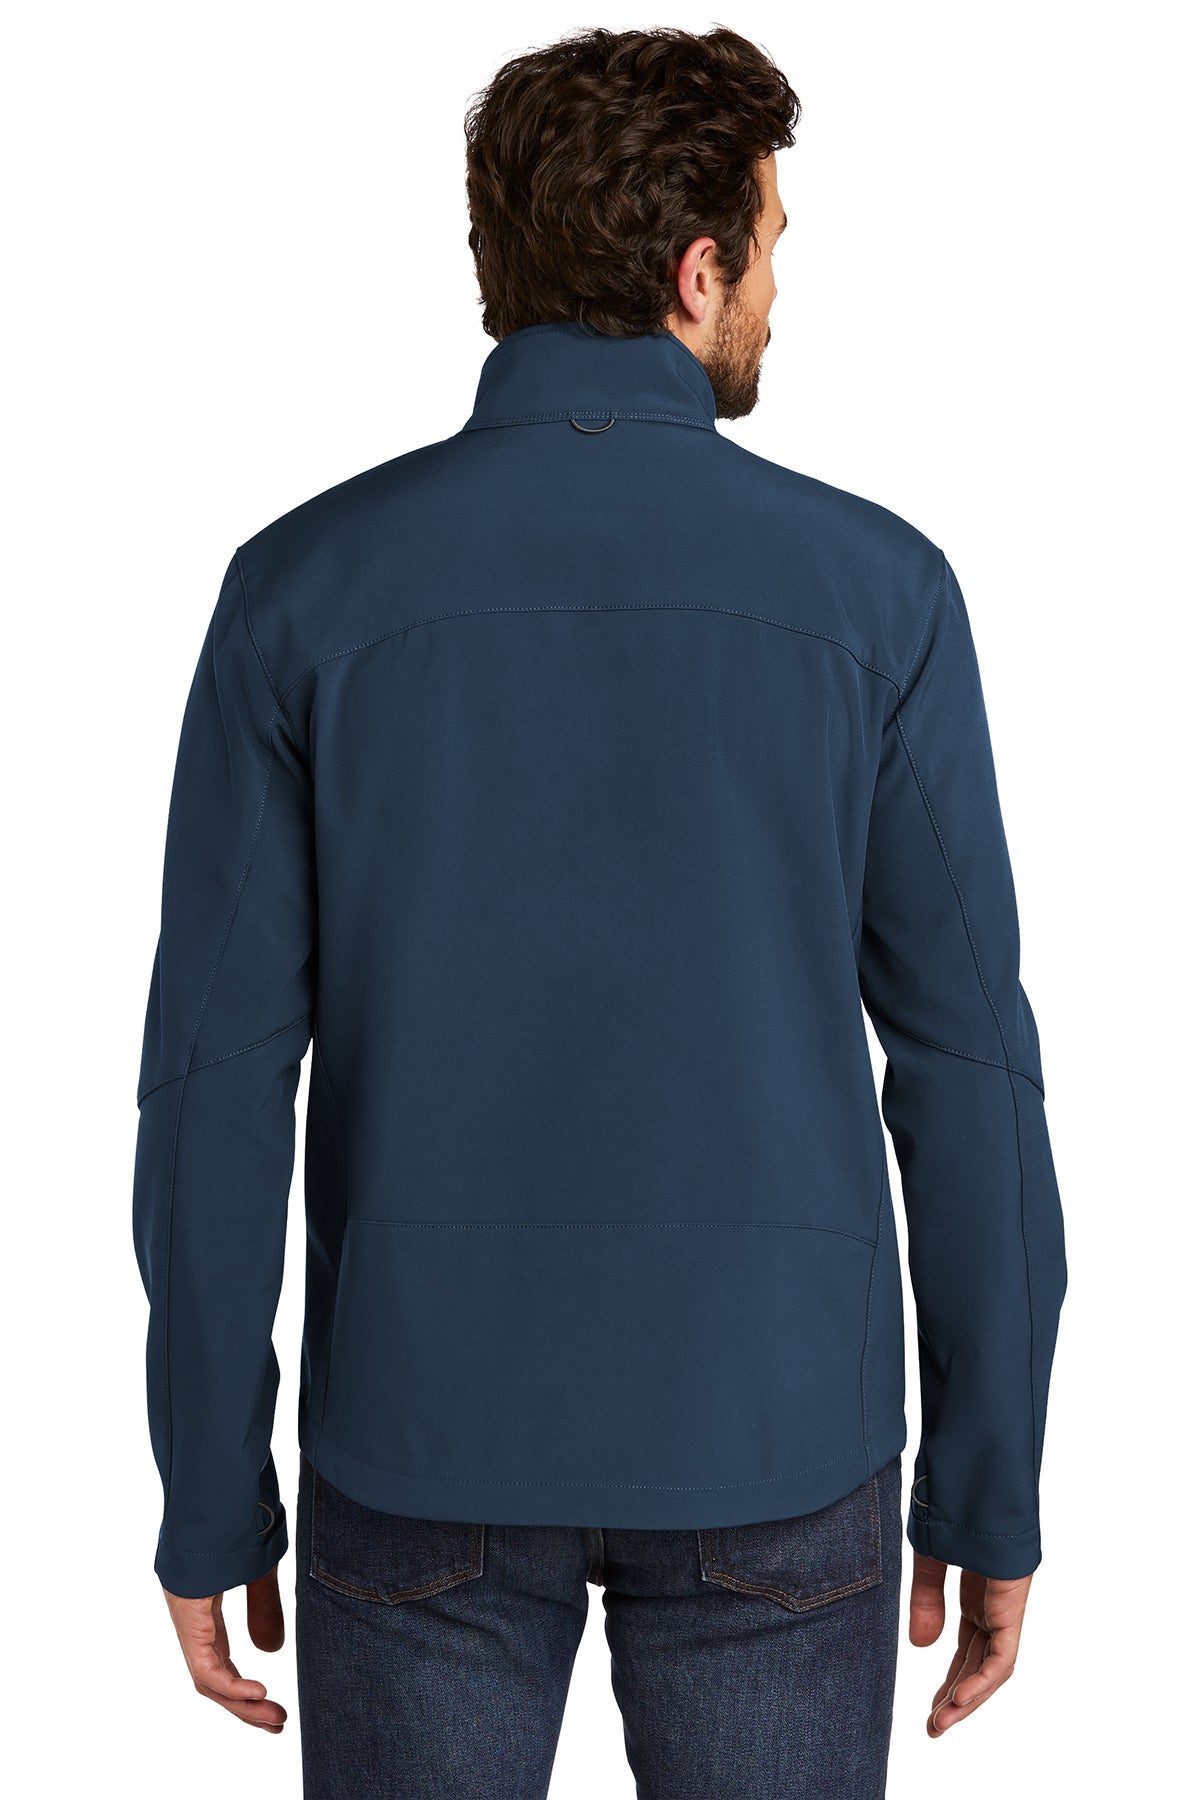 eddie bauer_eb530 _river blue_company_logo_jackets